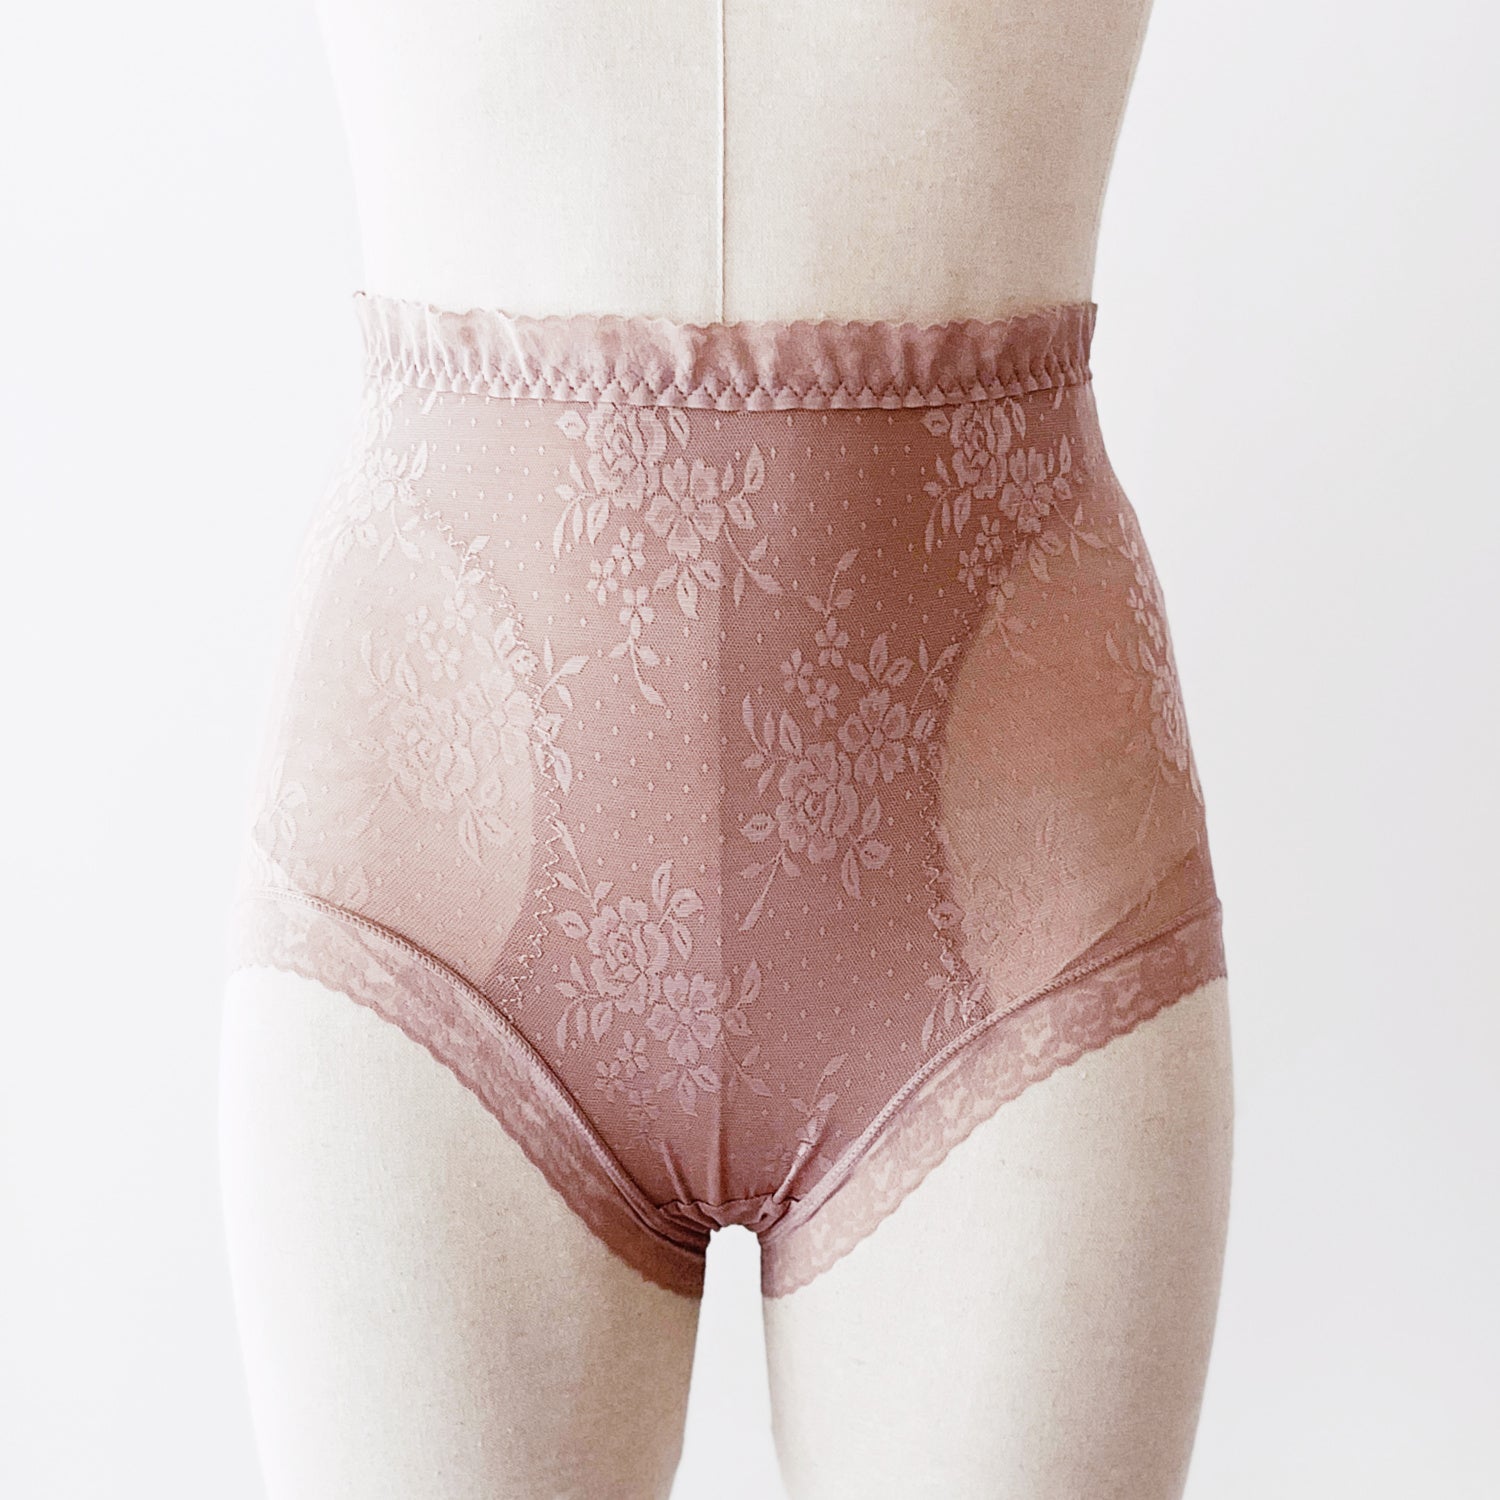 High waist cotton lace panty brief women's